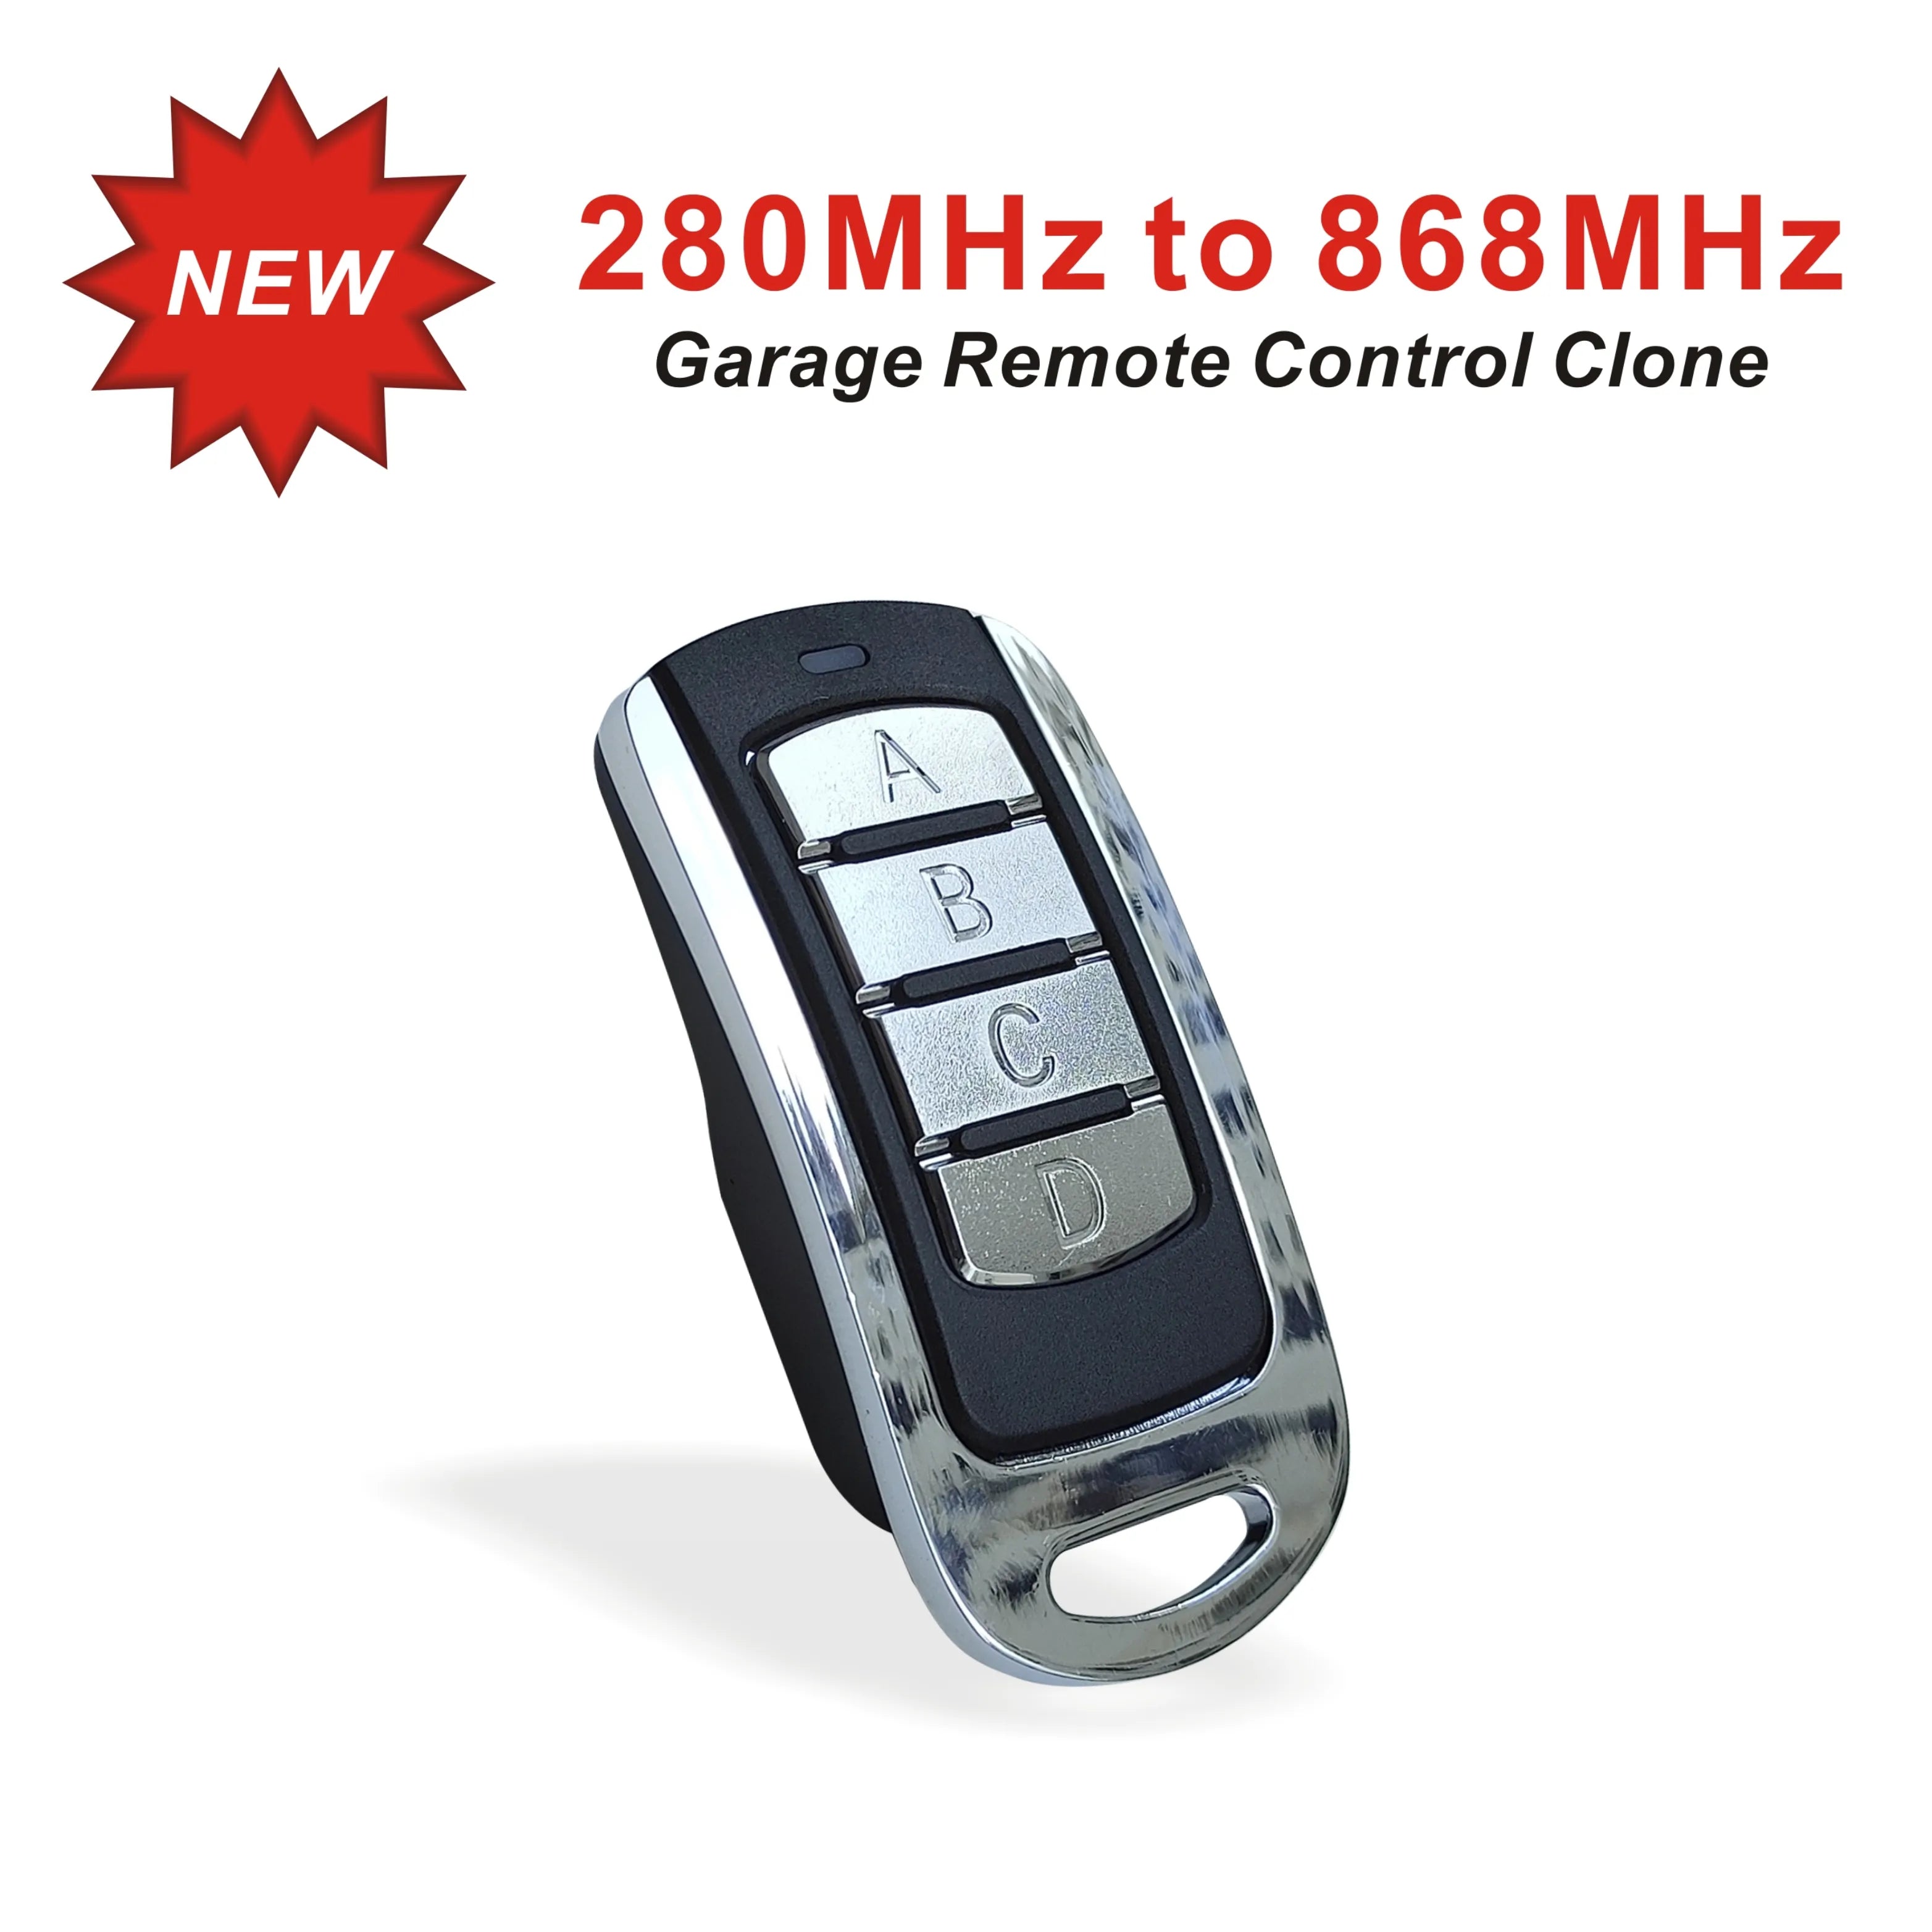 Garage Door Remote Control 868mhz gate control rolling code 287-868MHz remote control duplicator clone Garage Command Opener